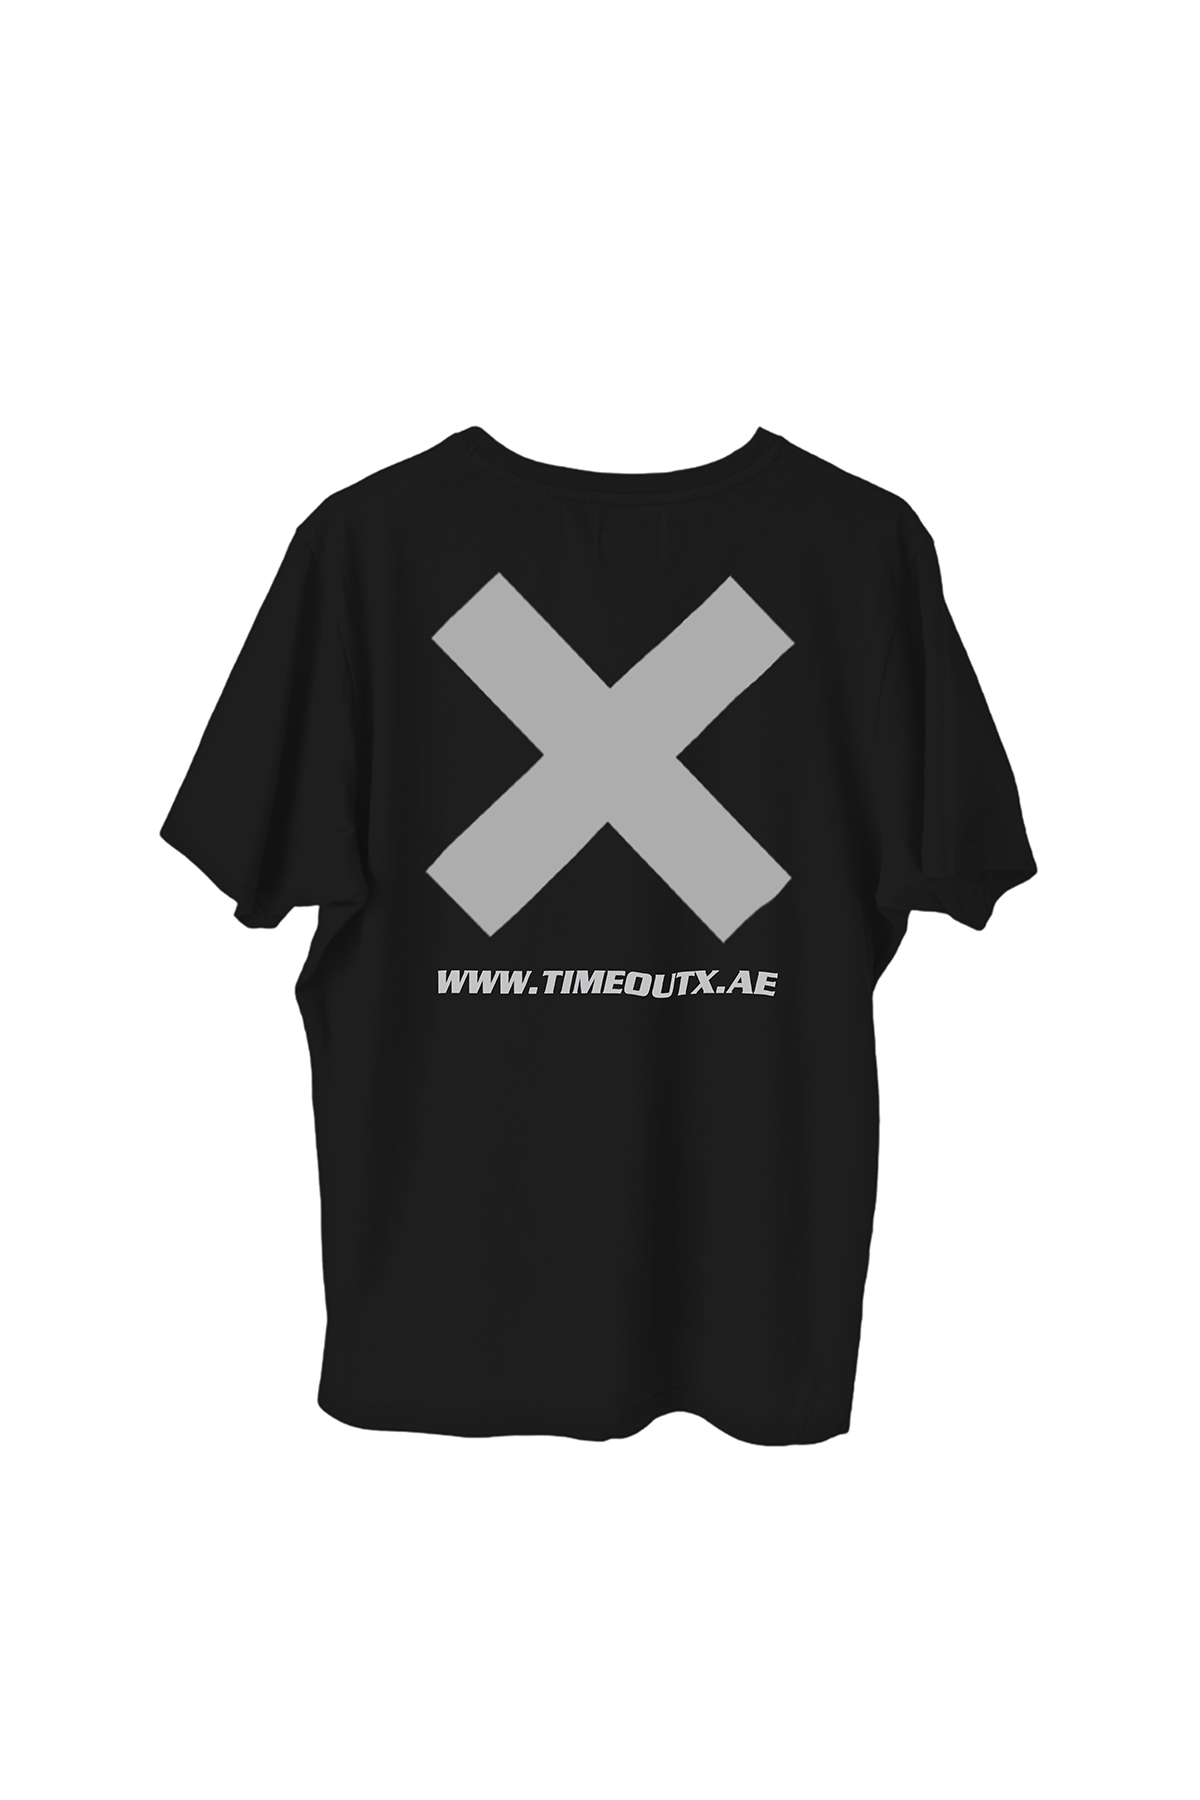 Time-Out-X-Signature-Graphic-Cotton-T-Shirt—Black—Back